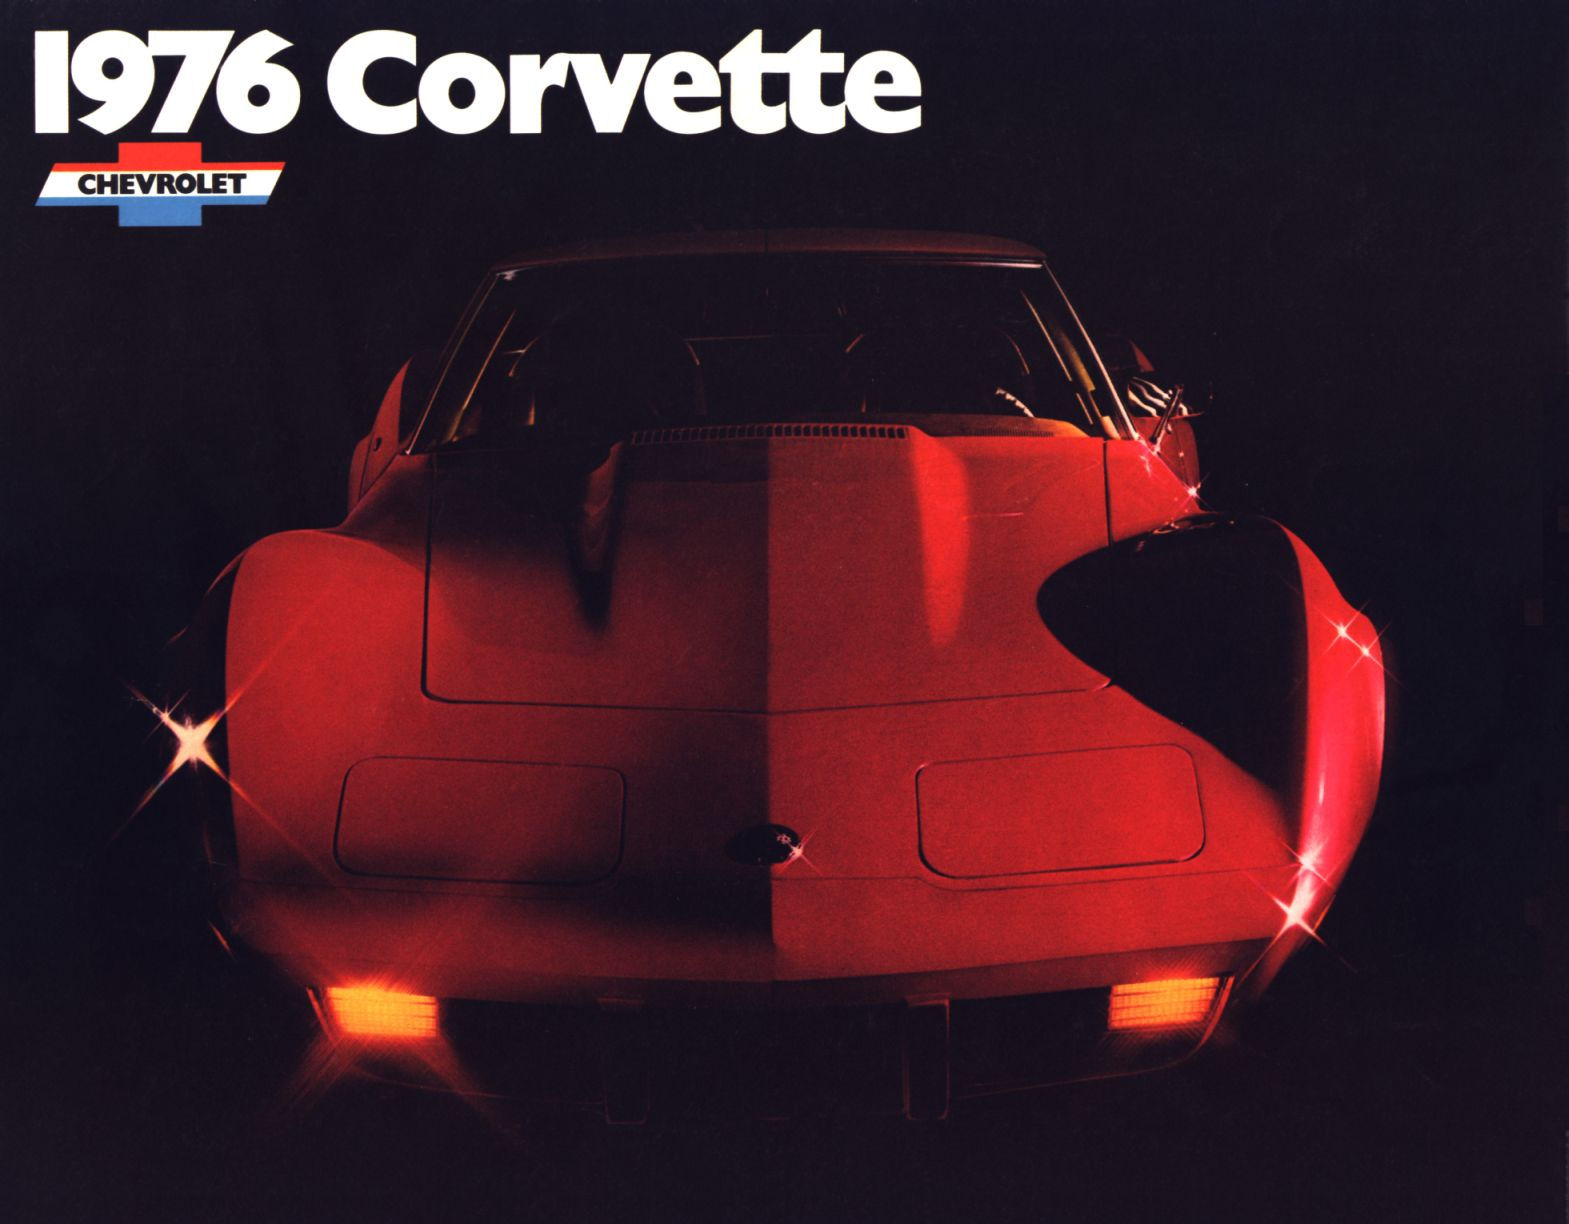 1976 Corvette Brochure Page 5